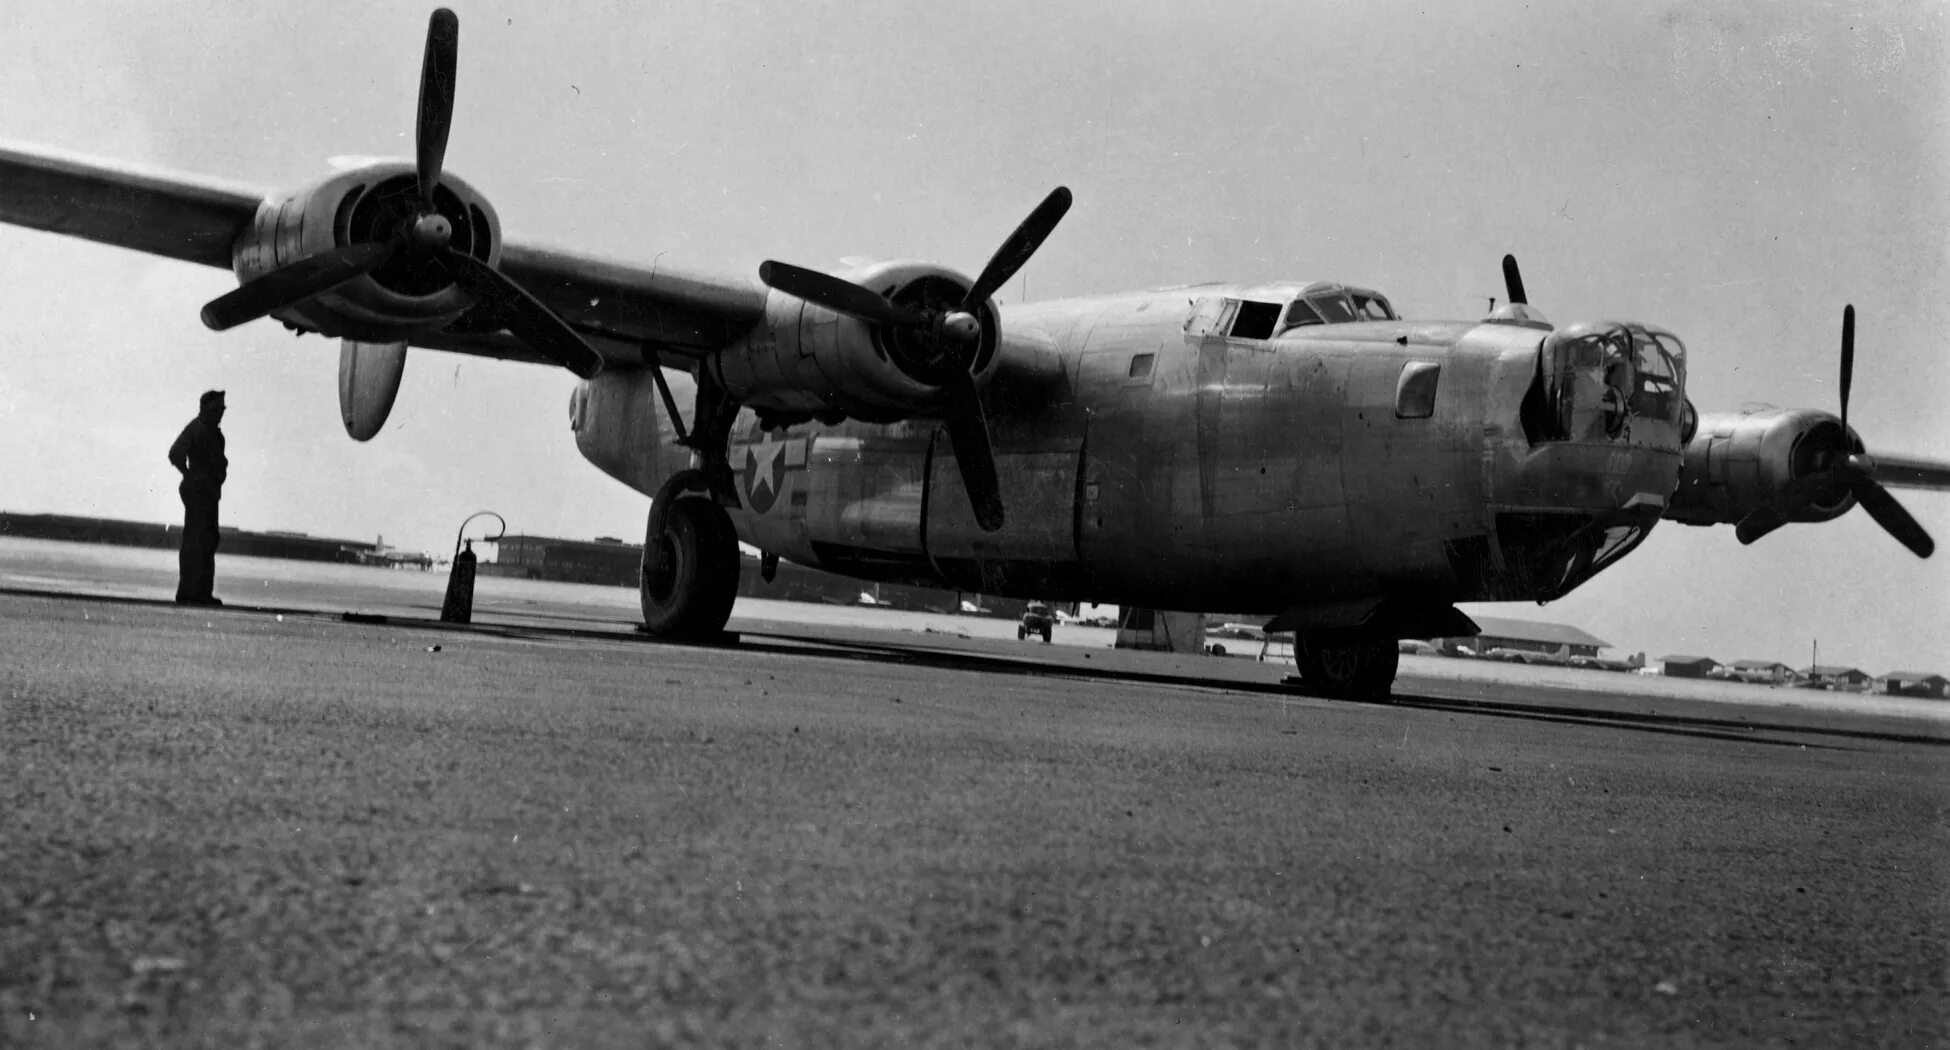 Б 24 рассказ. Б-24 Либерейтор. "Консолидэйтед" b-24 "Либерейтор". B-24 Bomber. Consolidated b-24 Liberator.